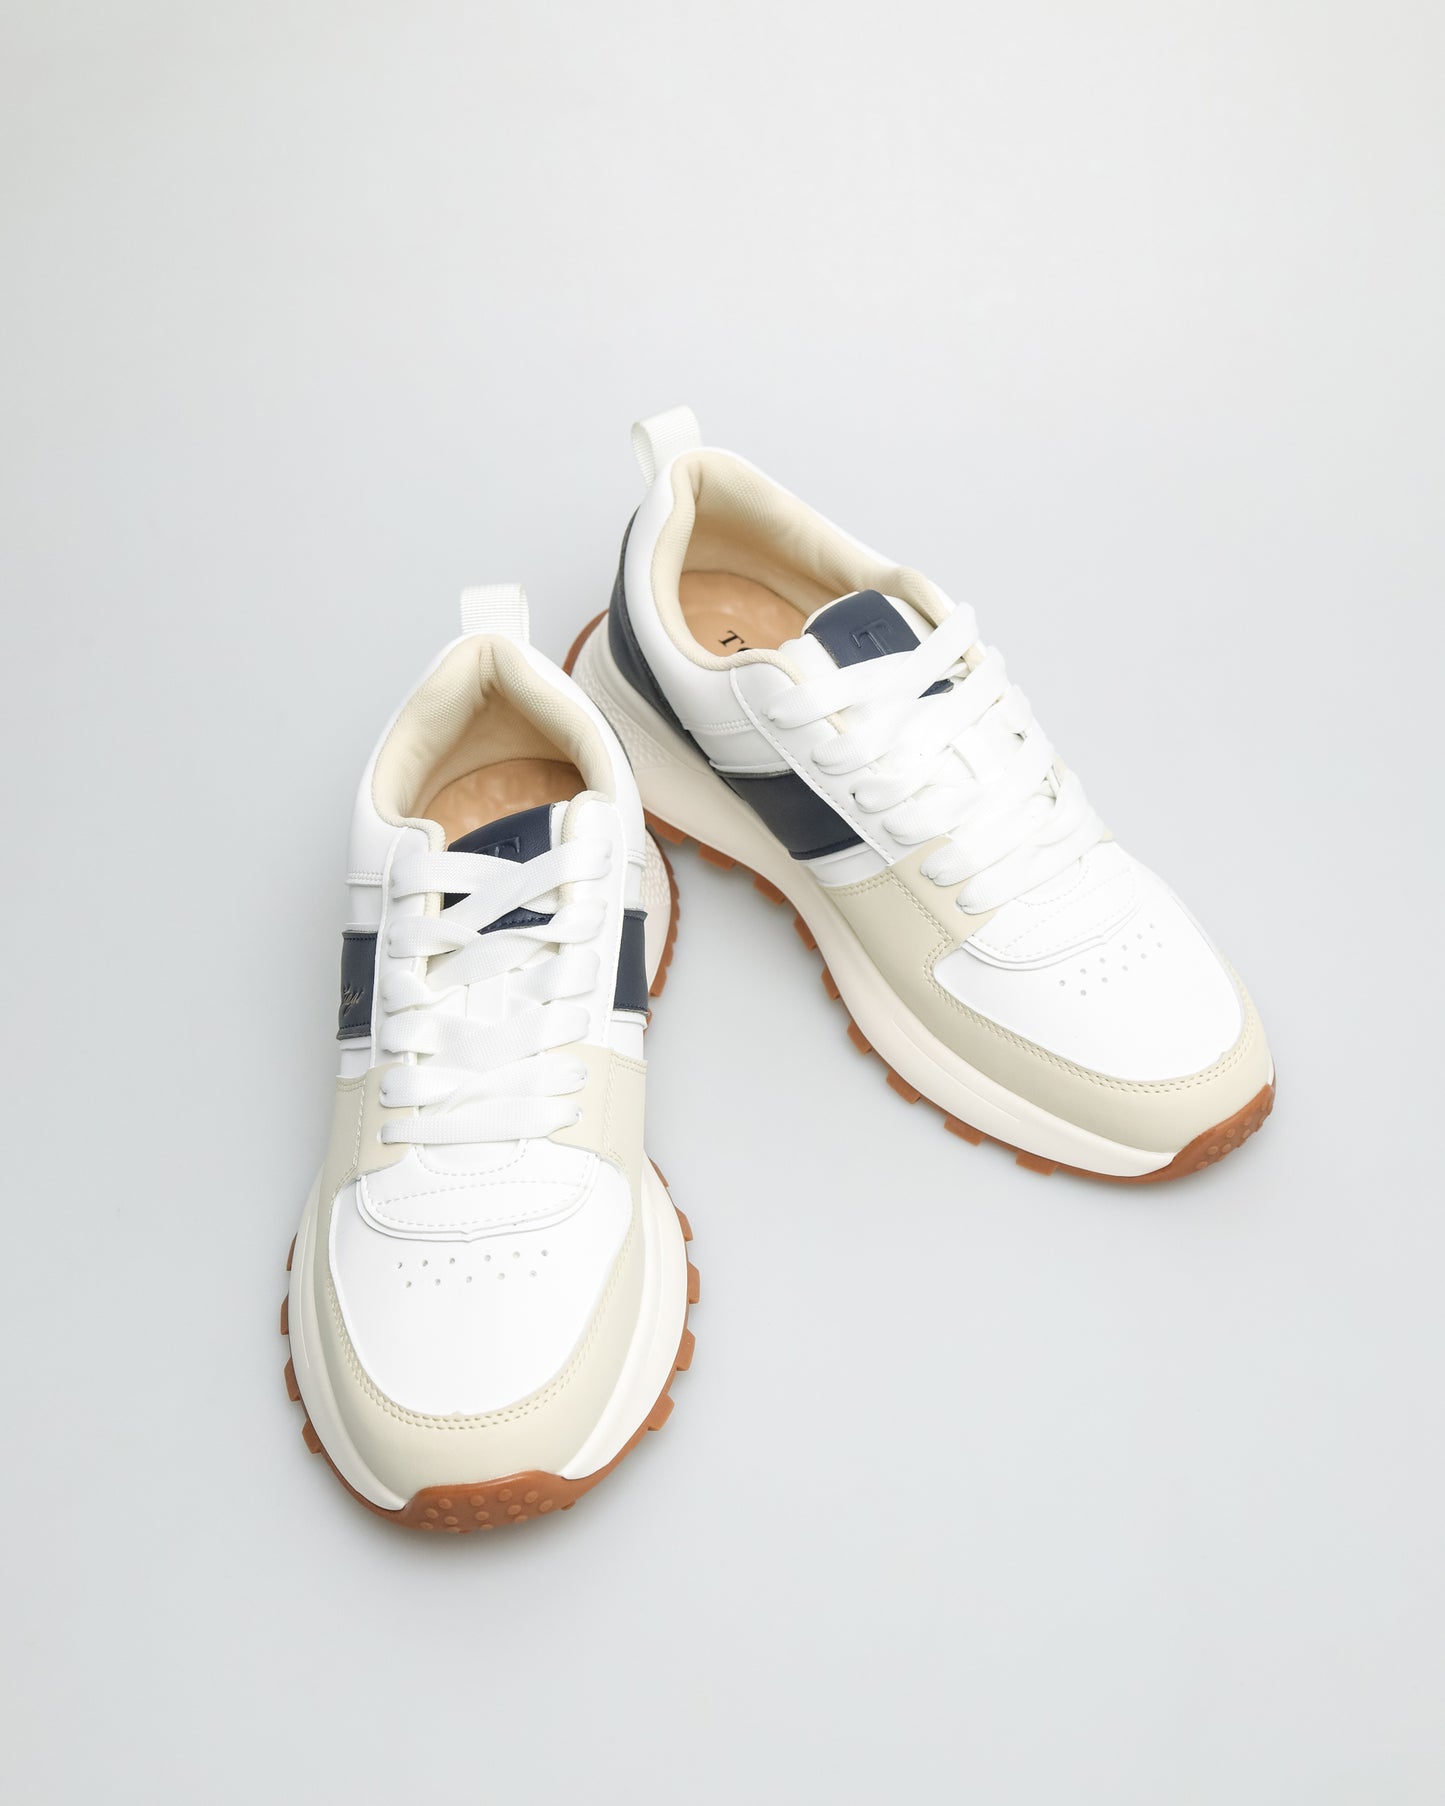 Tomaz TY021 Men's Sneakers (Apricot/White/Navy)